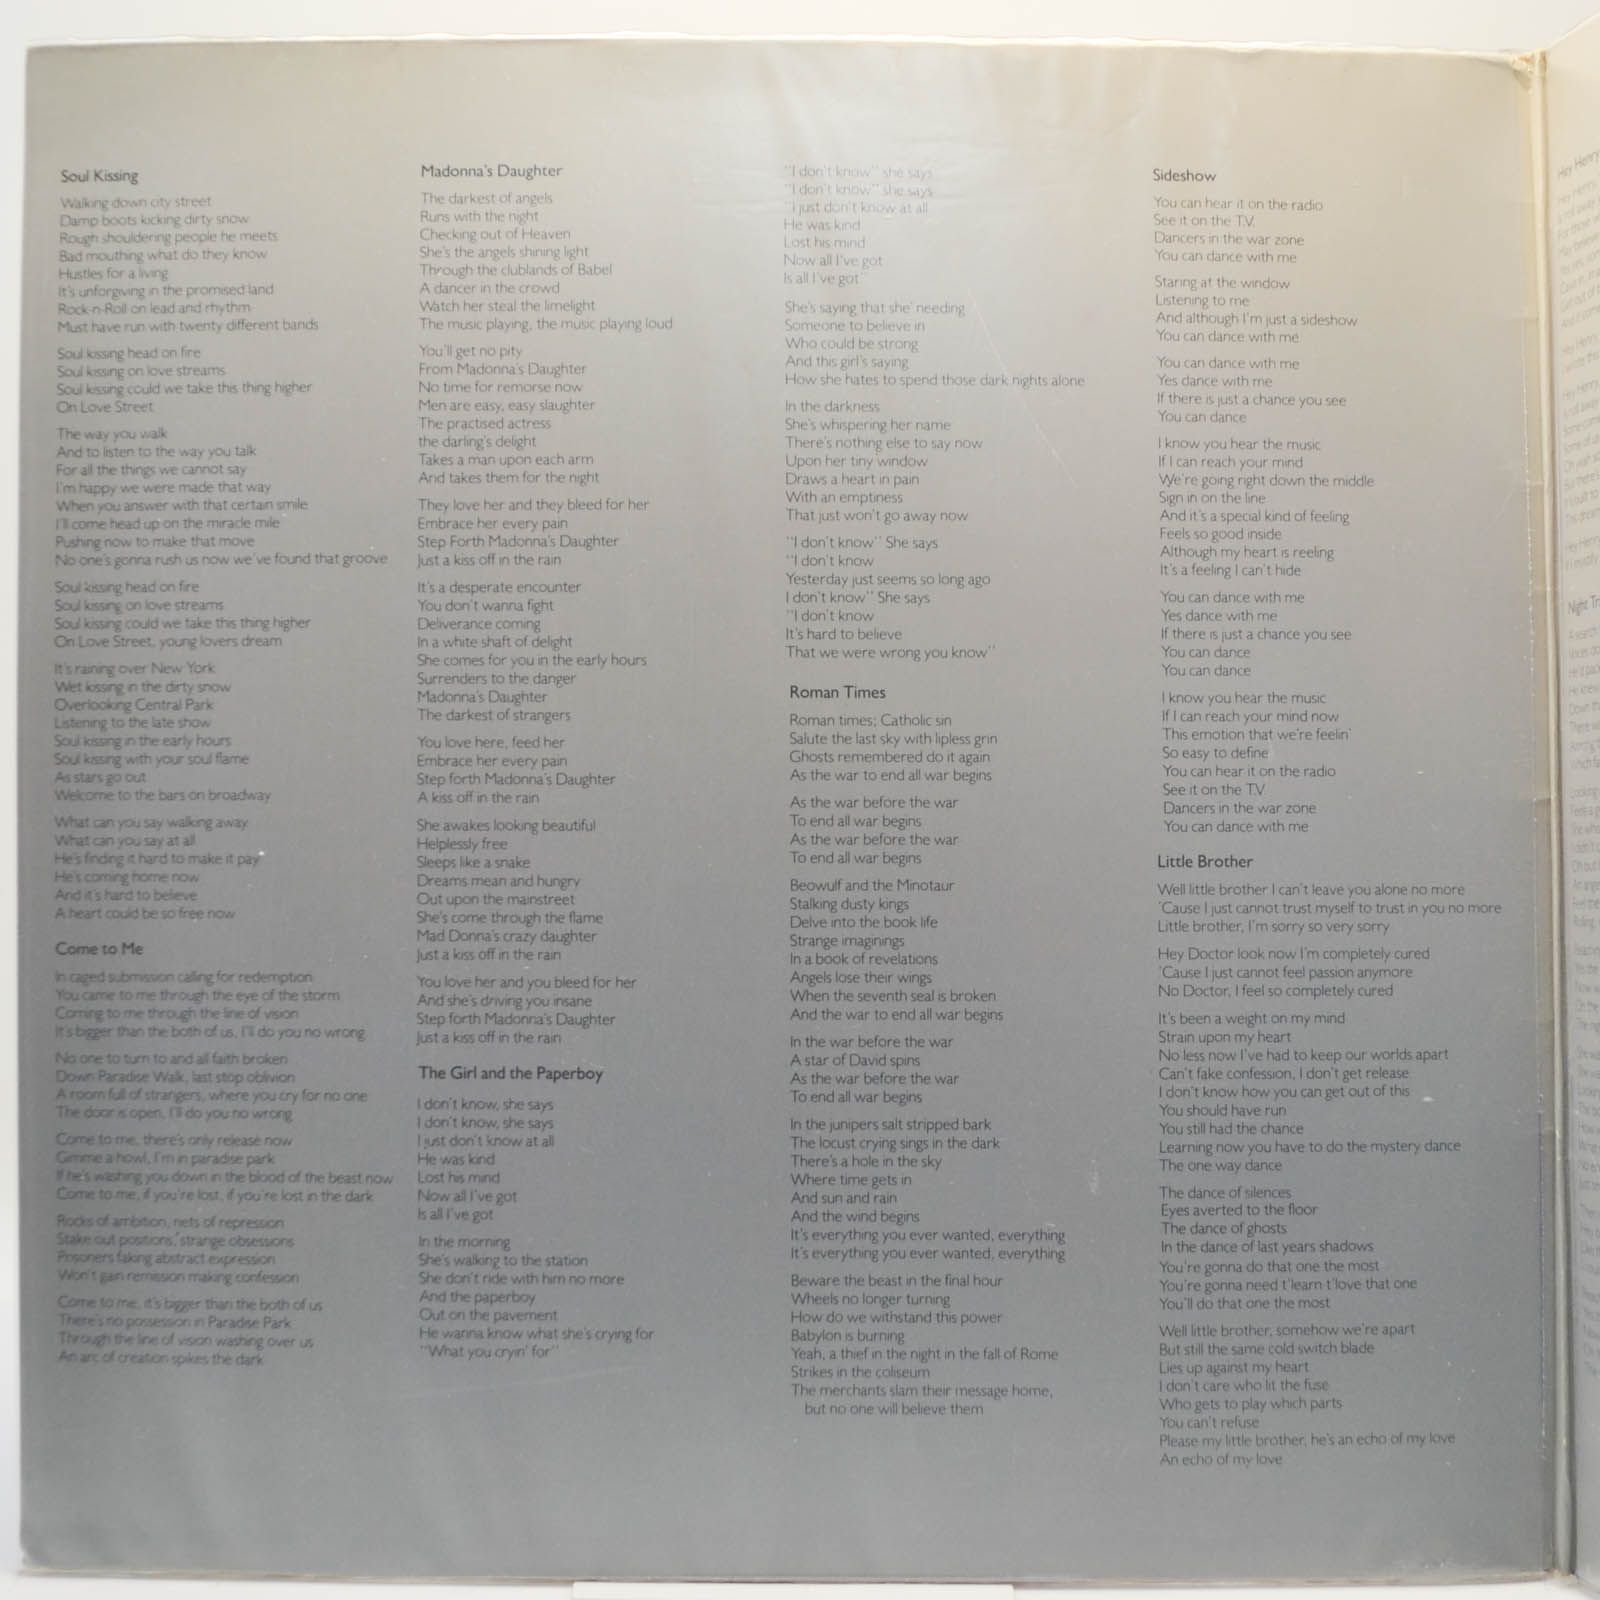 David Knopfler — Release, 1983